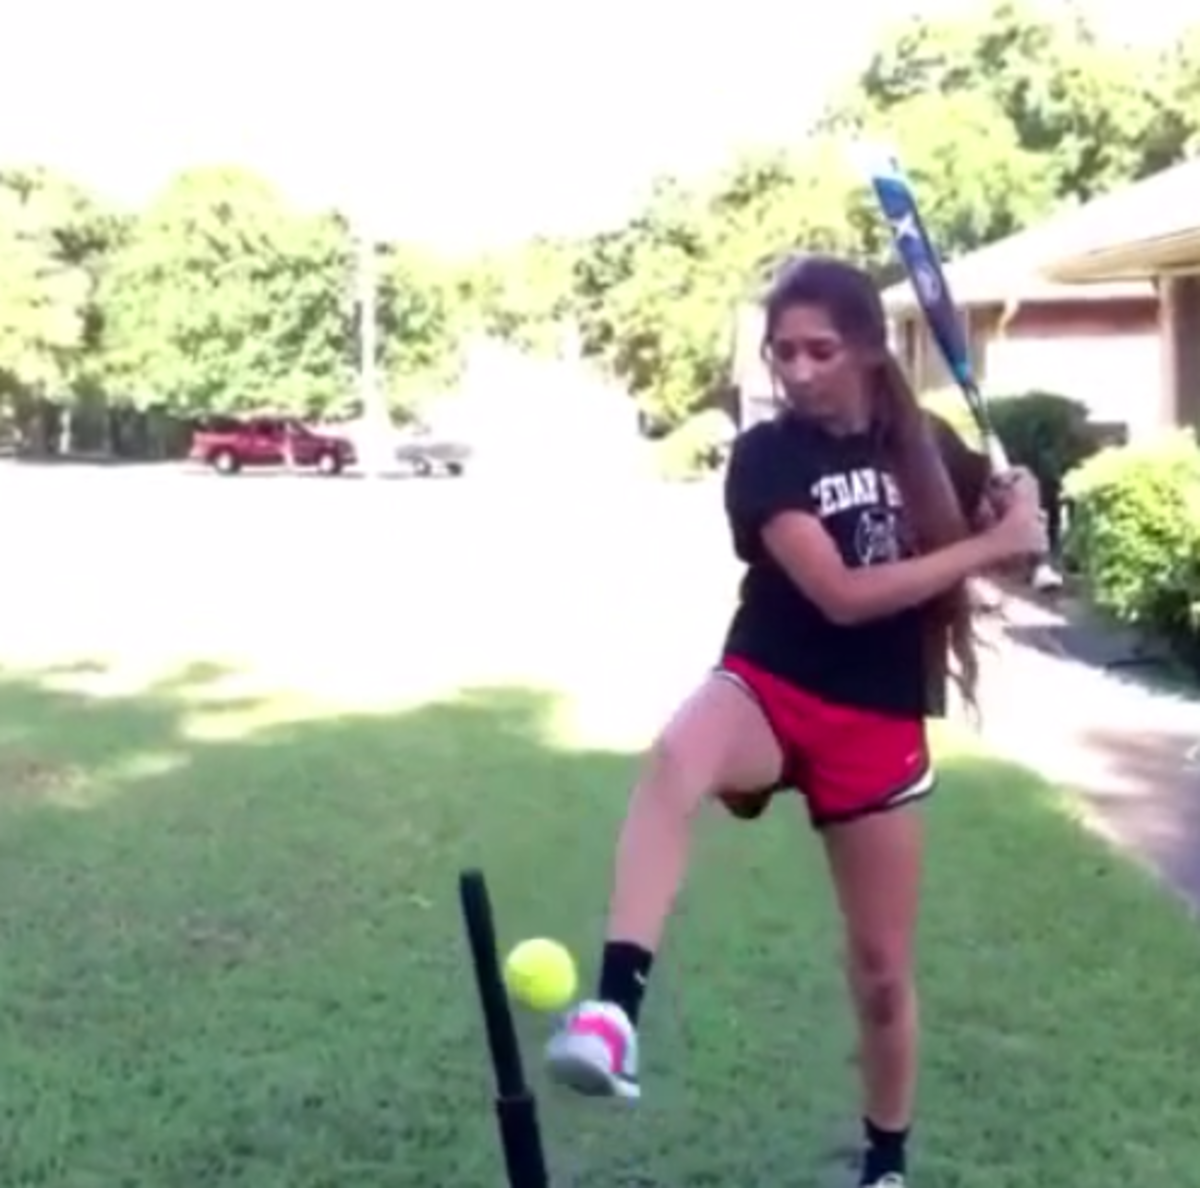 Girl does bat tricks in her backyard.